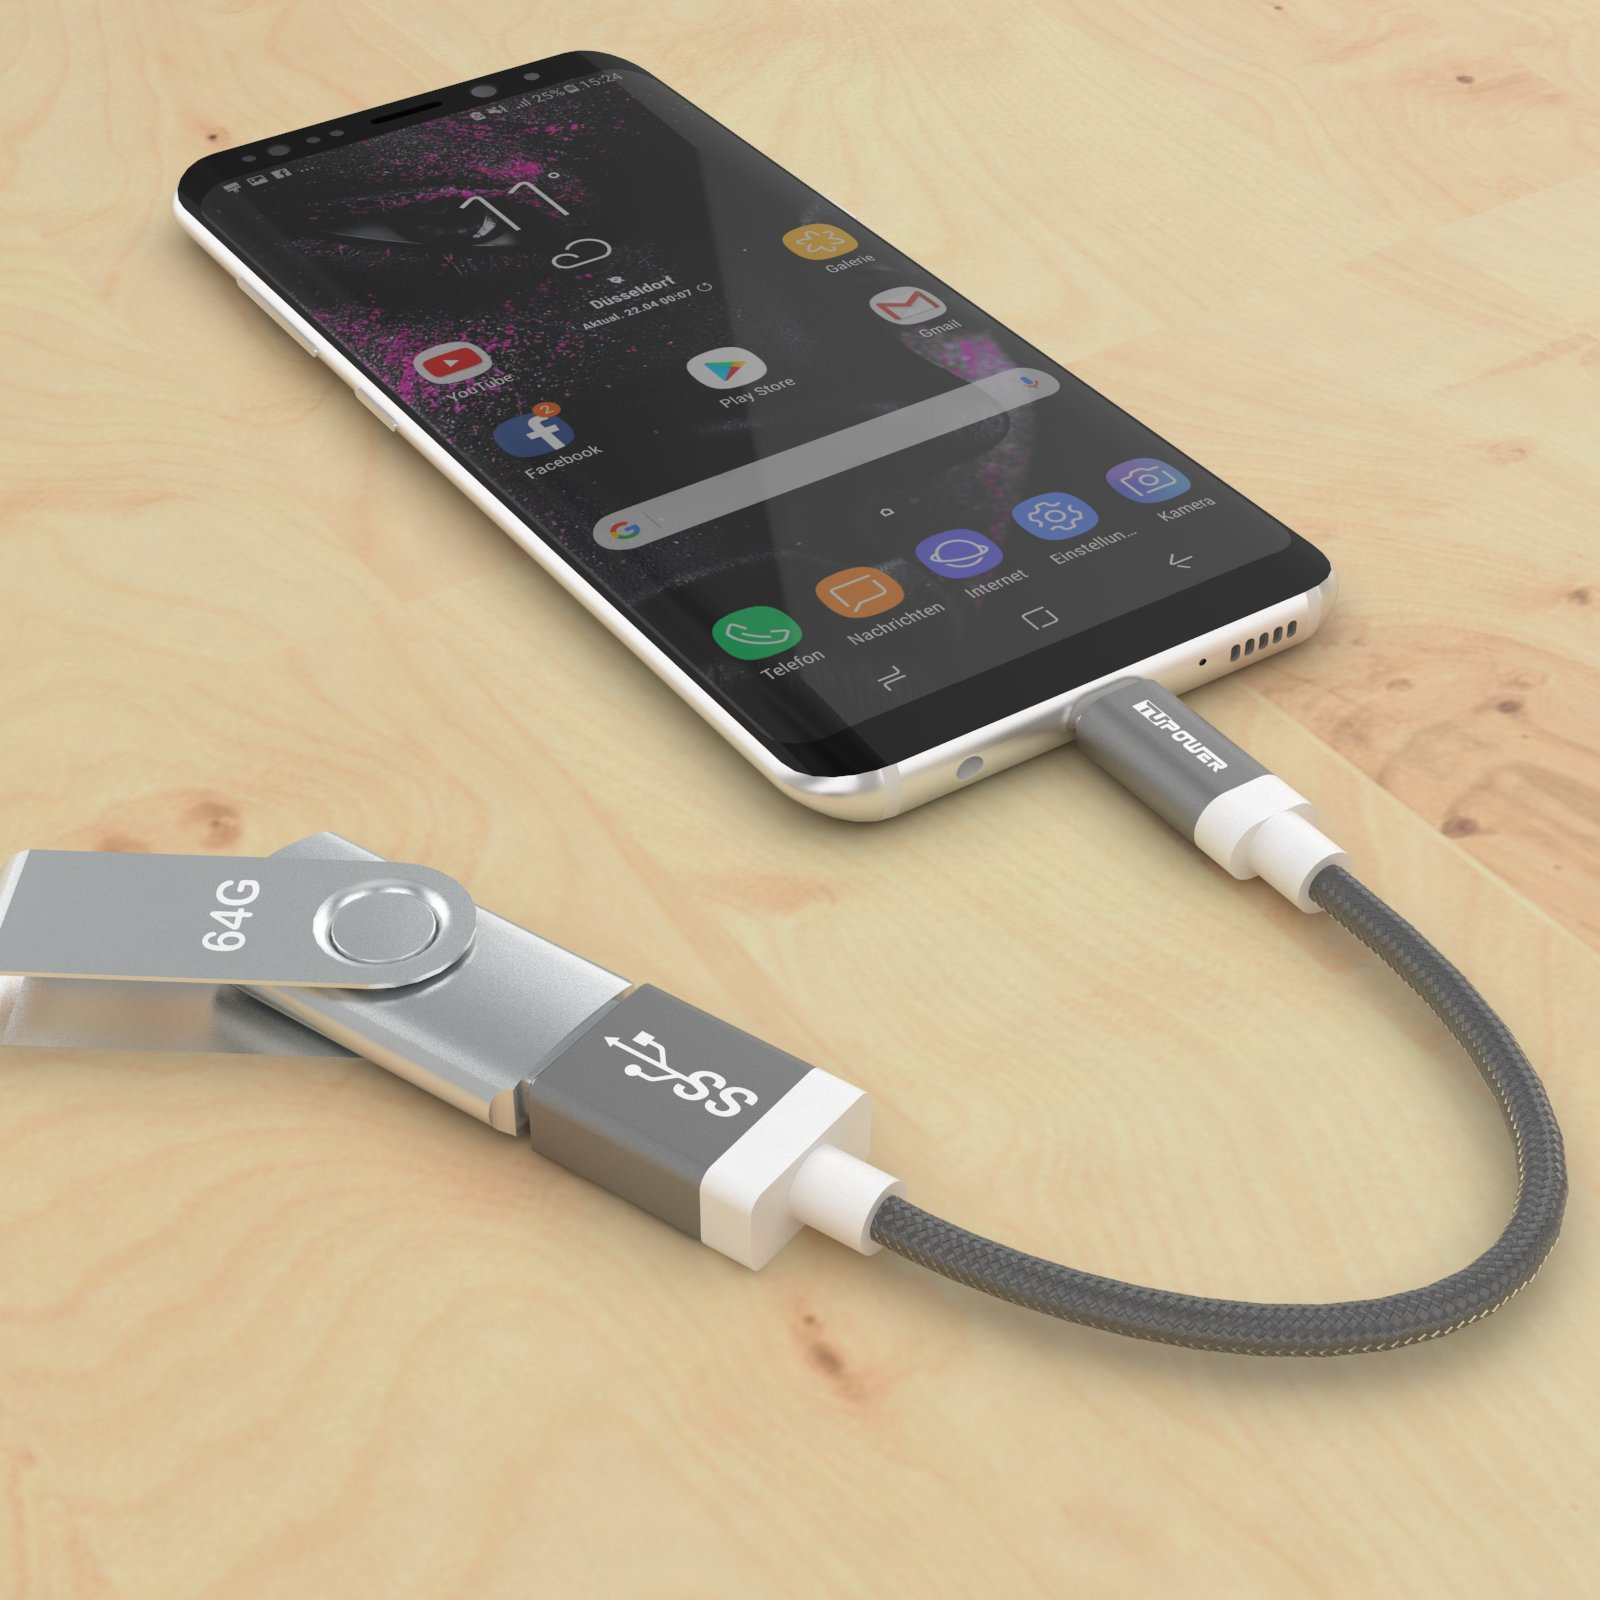 für A11 Xiaomi USB-C USB-A Adapter 3.0 OTG Samsung TUPOWER Adapter USB auf C Apple